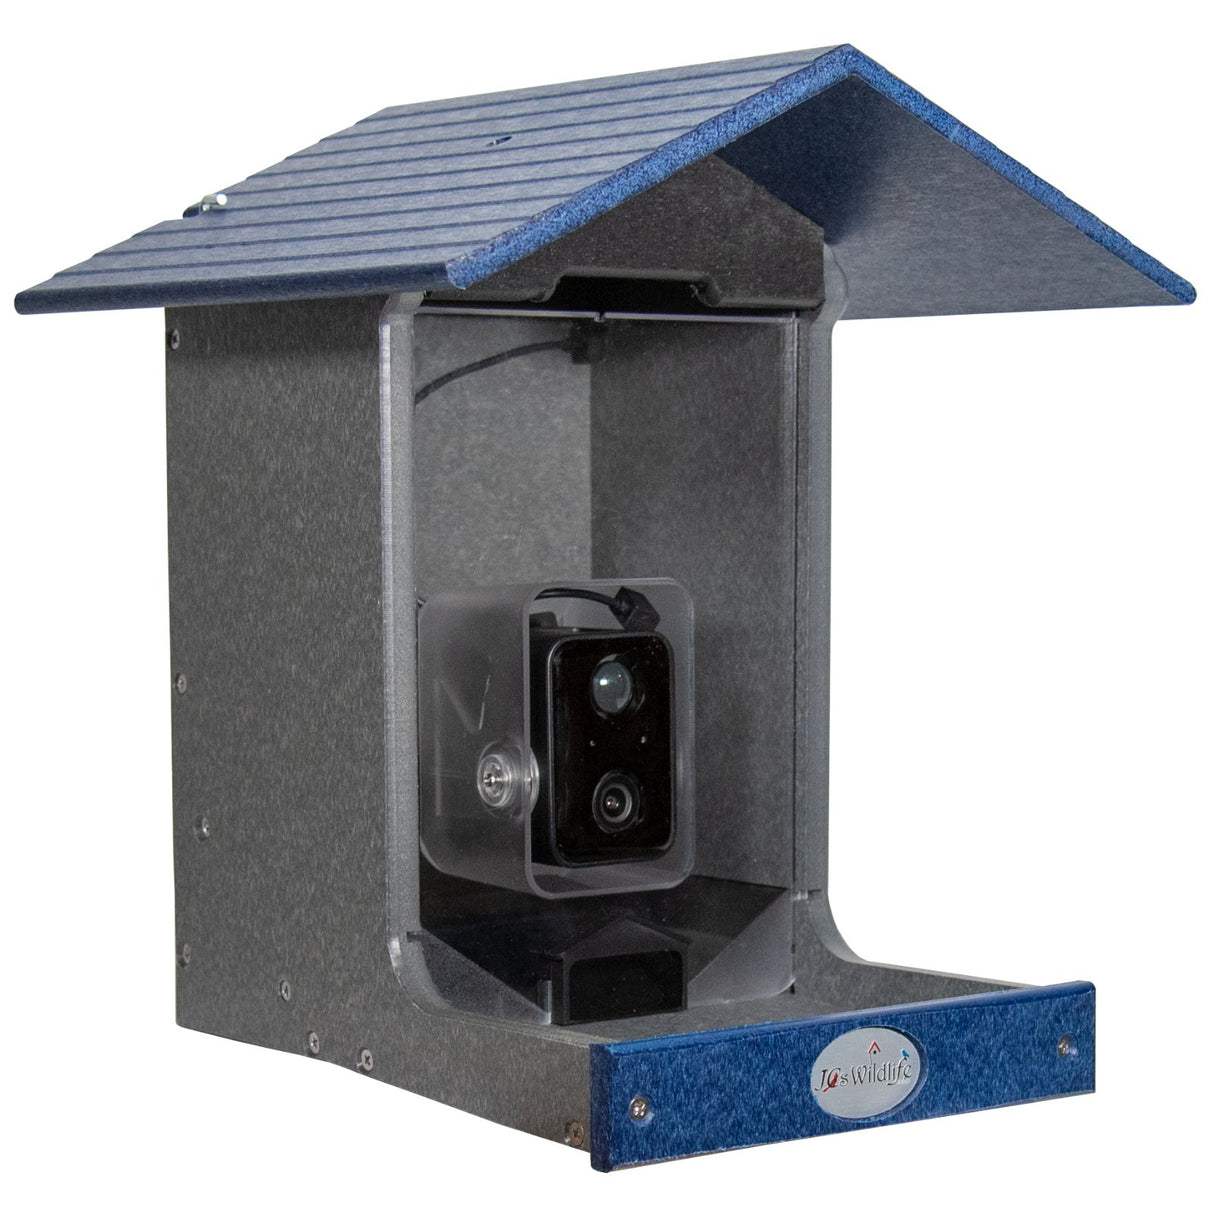 JCS Wildlife E-Z Fill Smart Bird Feeder with WiFi Camera, Solar Panel & AI Bird Recognition - JCS Wildlife